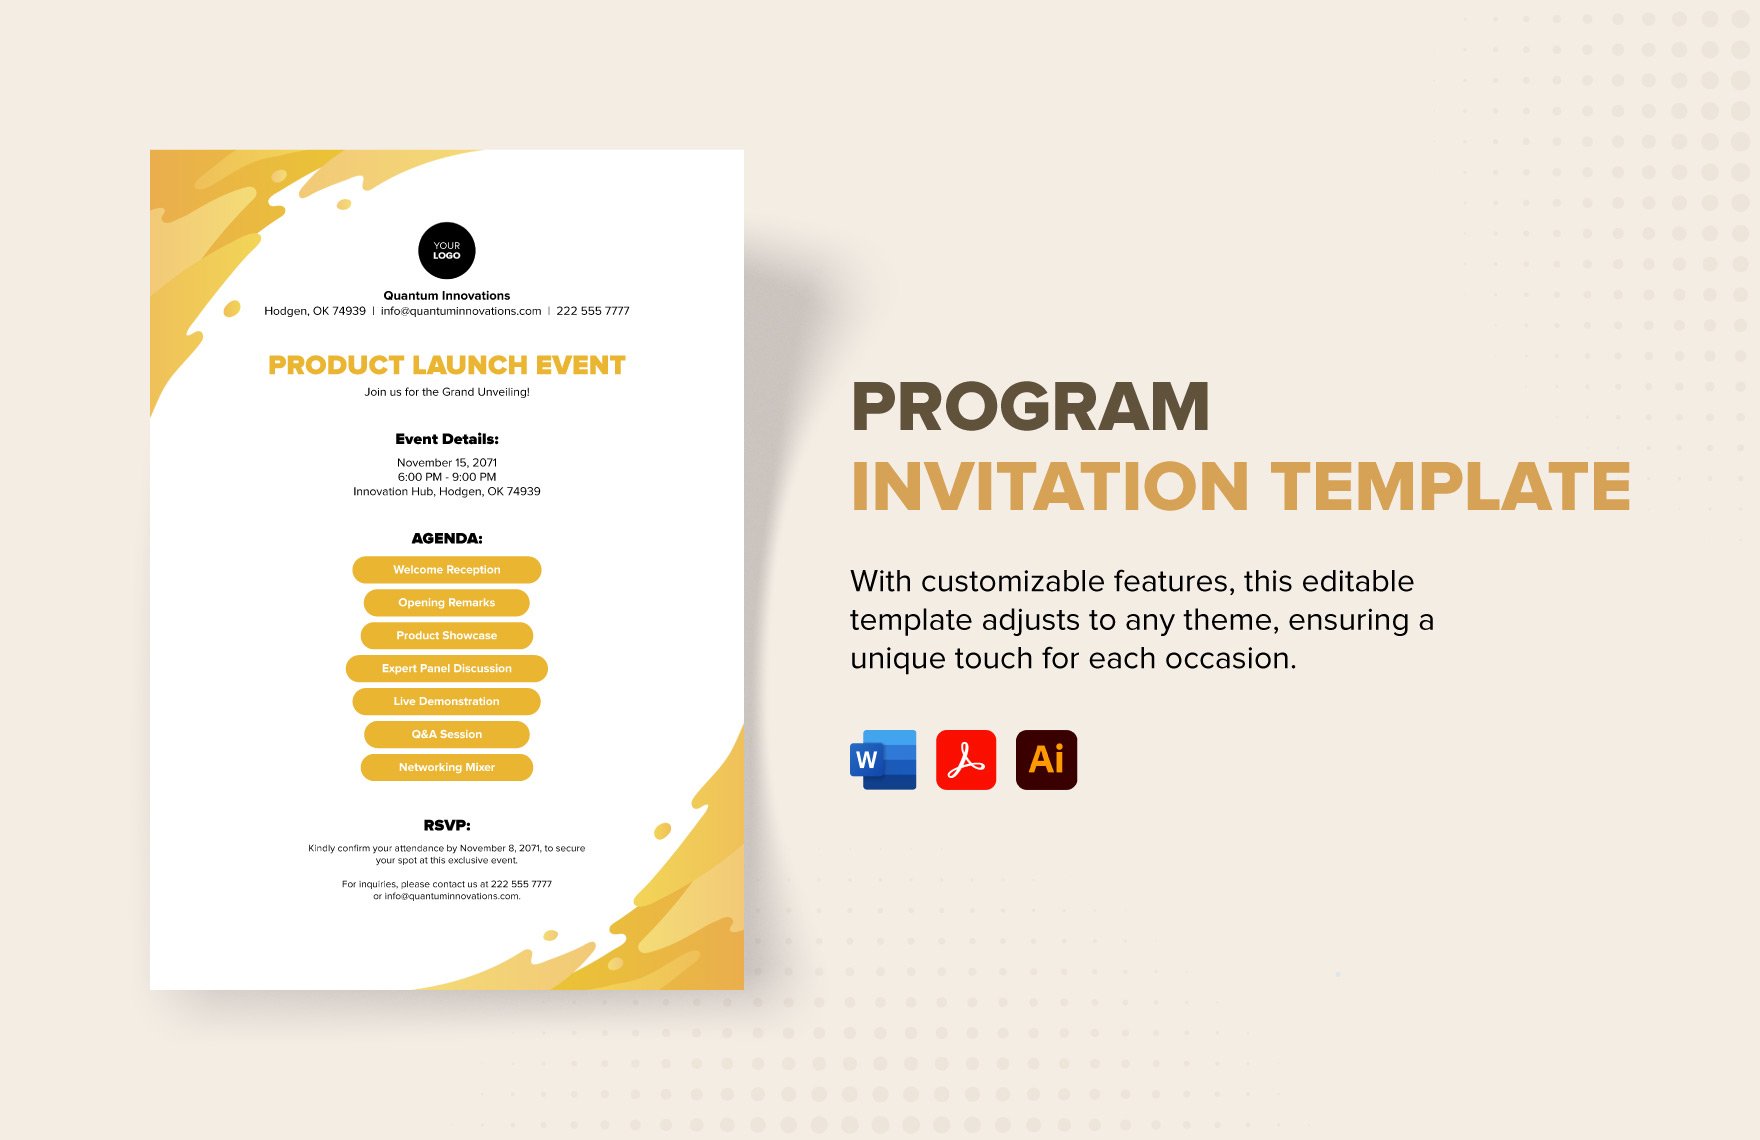 Program Invitation Template